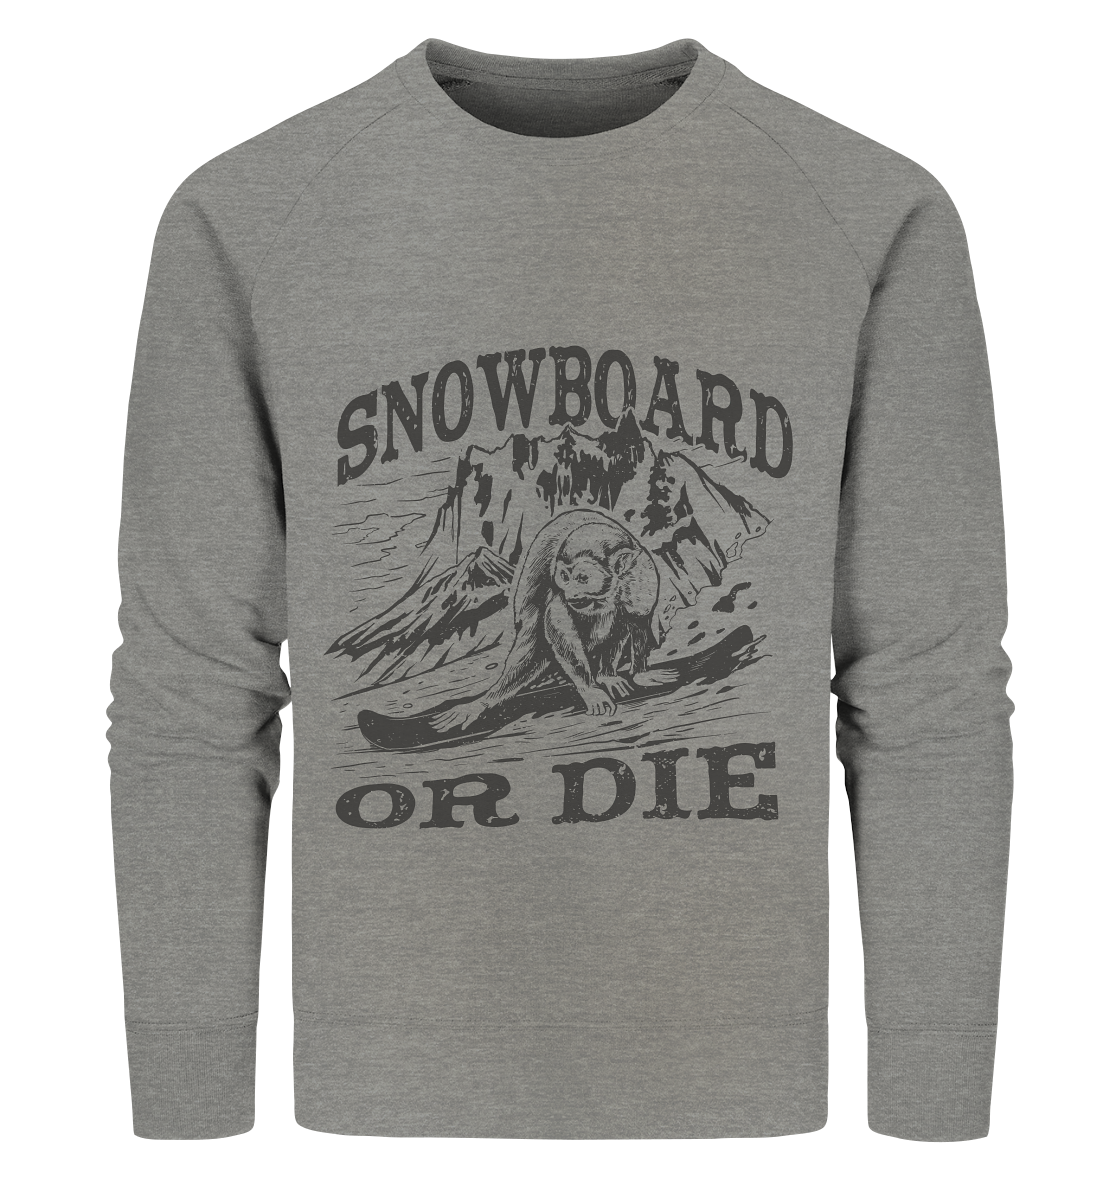 Snowboard or Die, monkey on a snowboard - organic sweatshirt